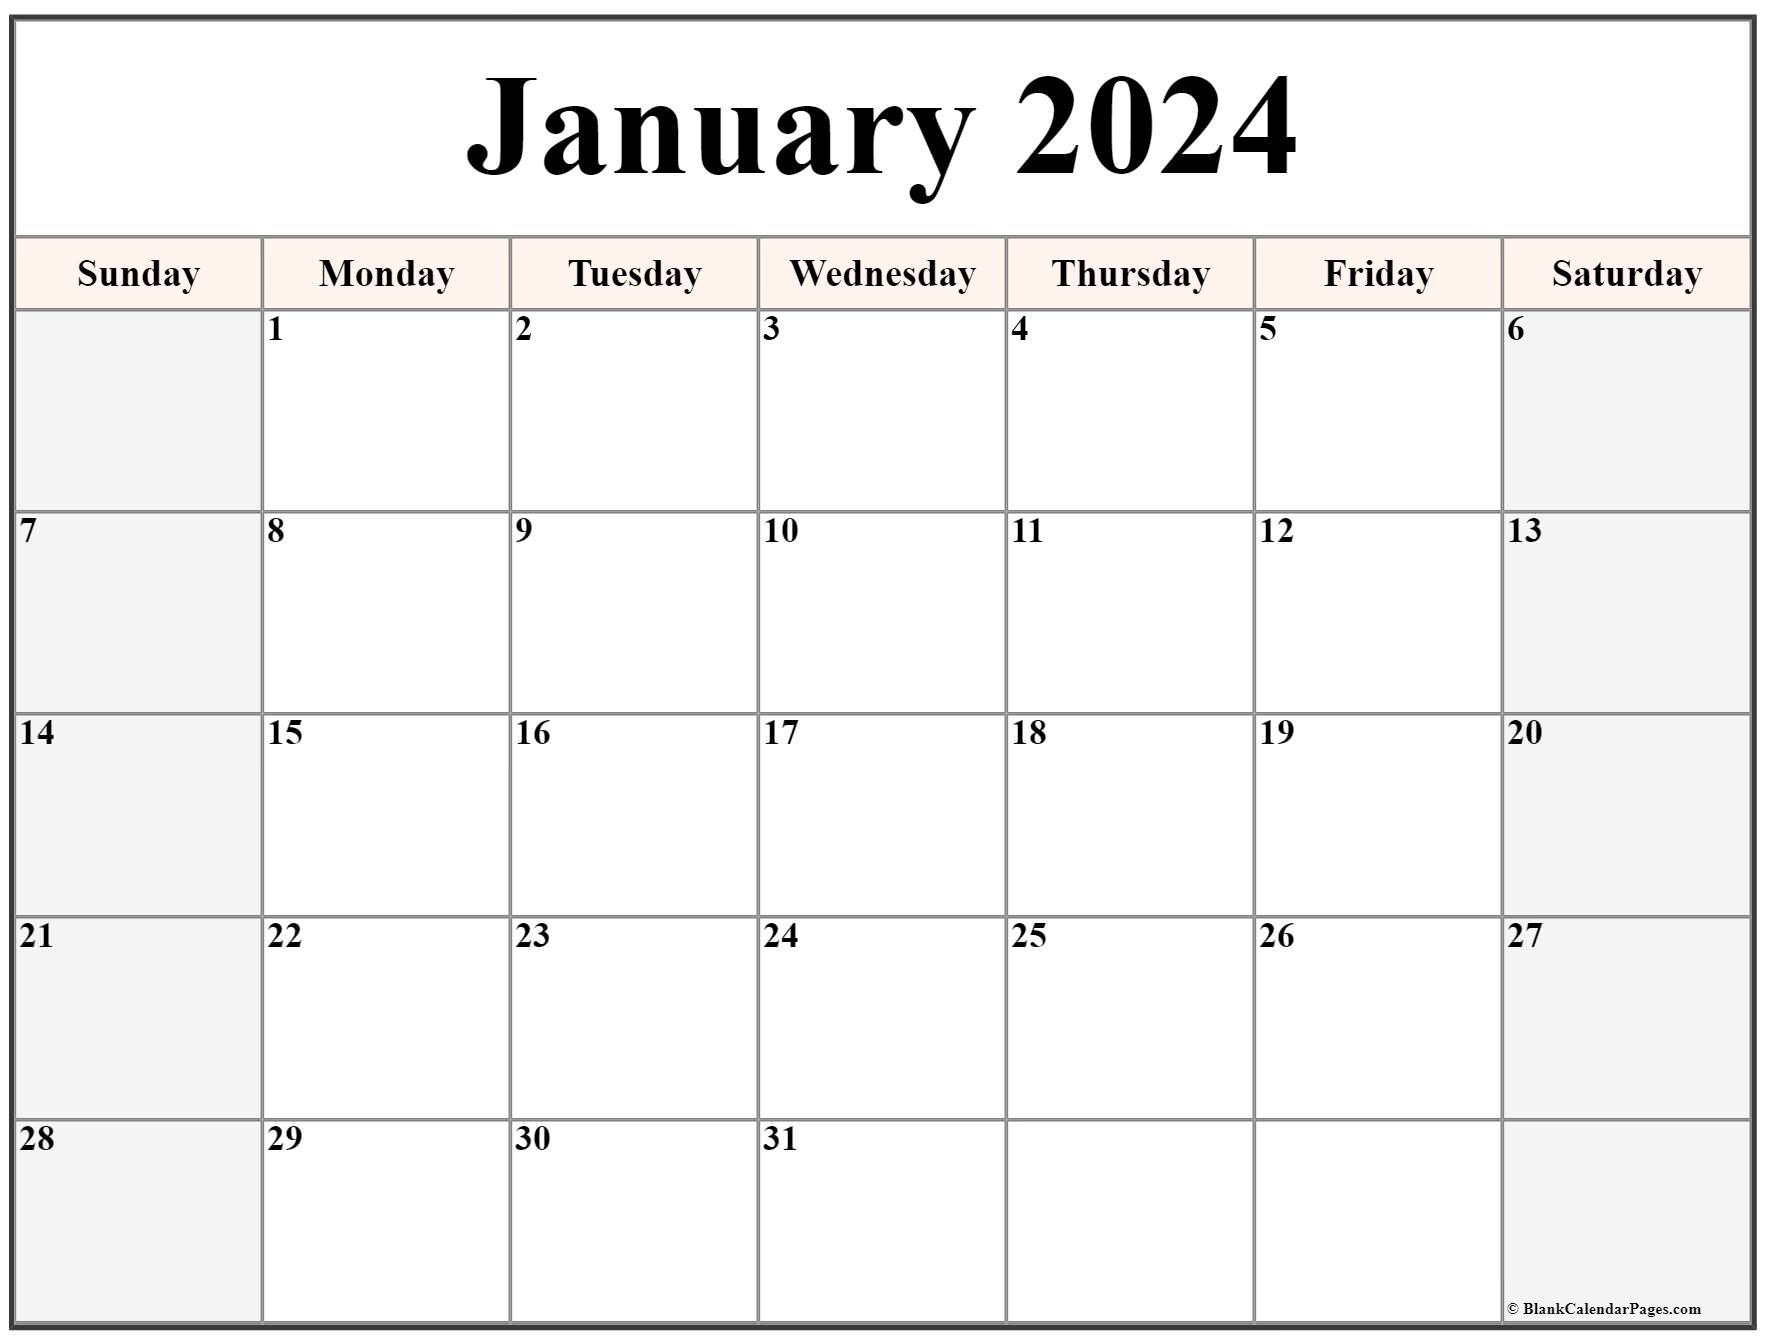 January 2024 Calendar | Free Printable Calendar | Printable Calendar 2024 January Wiki